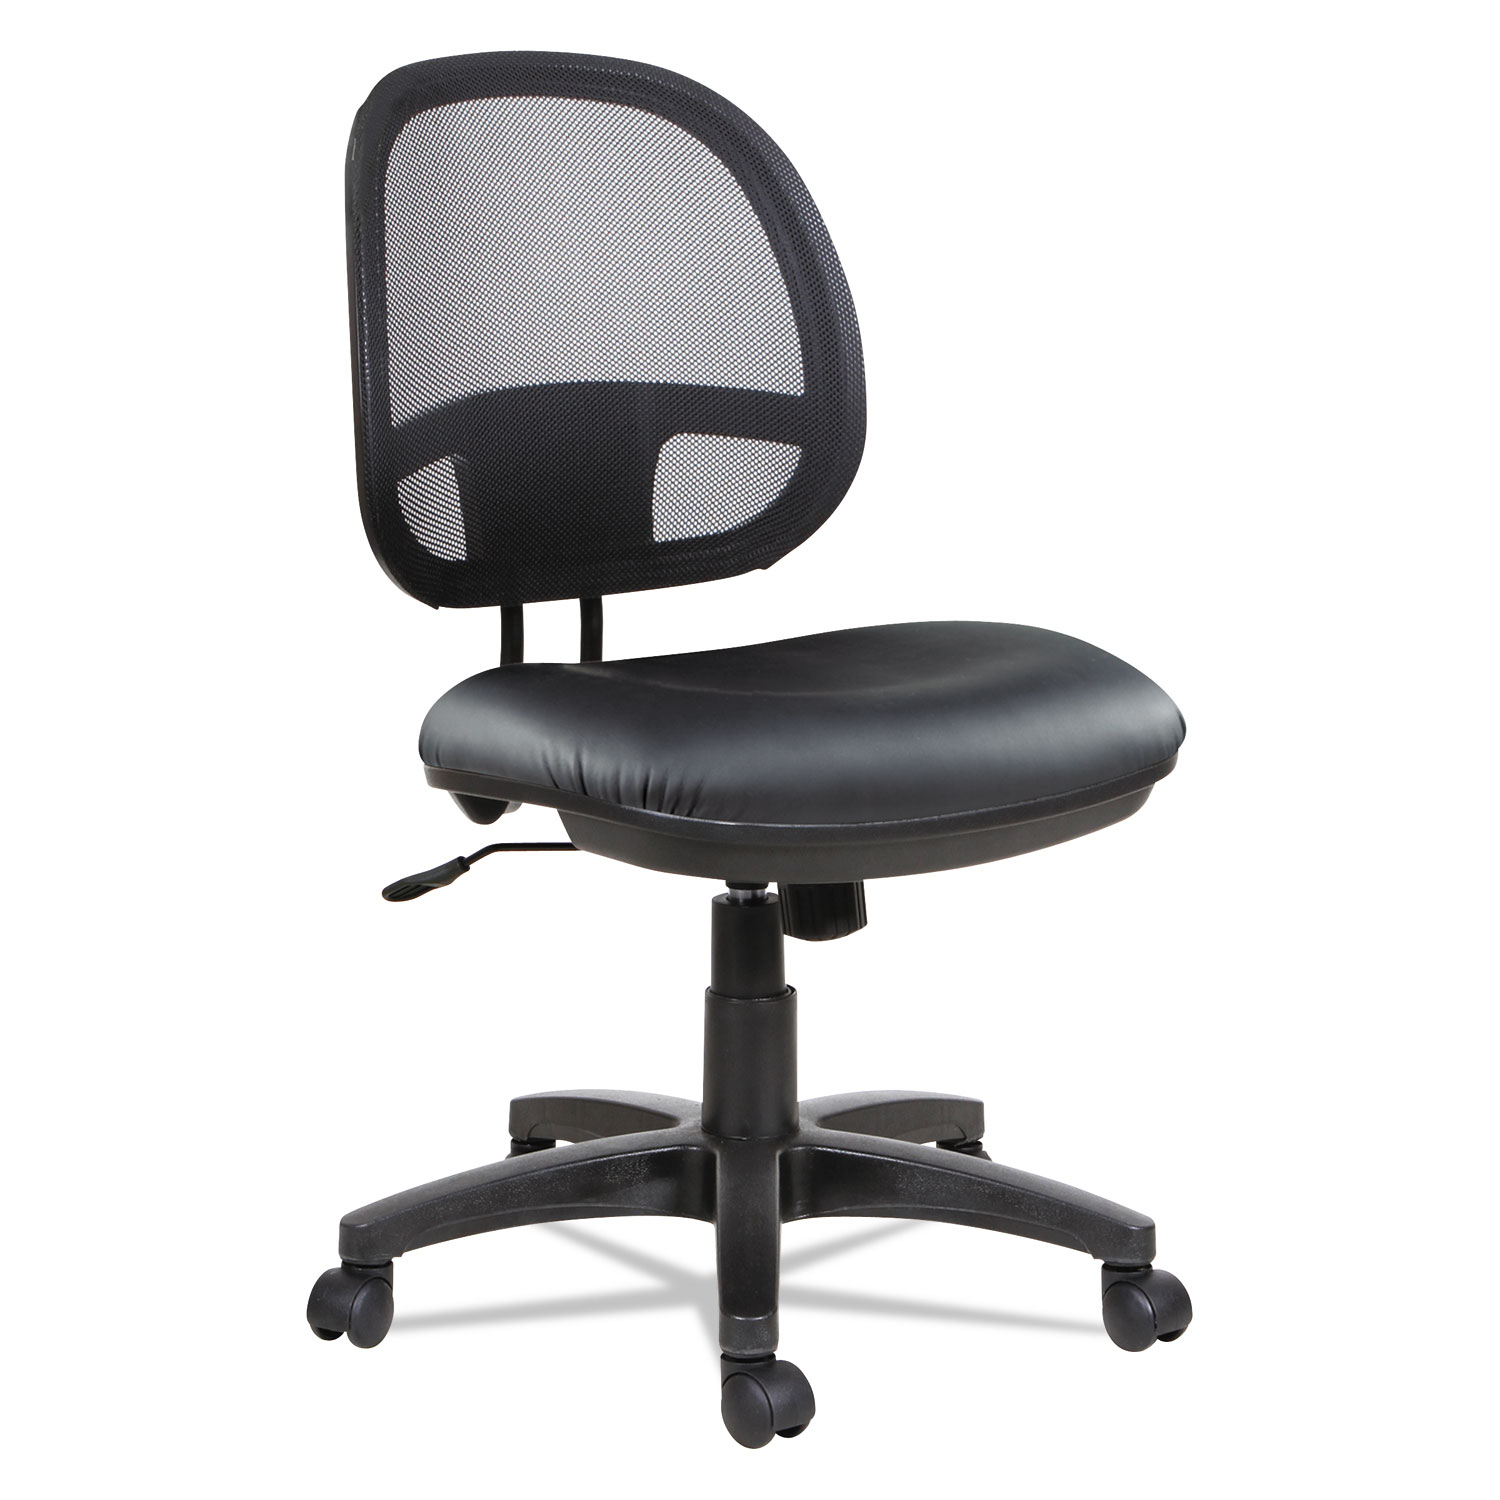  Alera ALEIN4815 Alera Interval Series Swivel/Tilt Mesh Chair, Supports up to 275 lbs., Black Seat/Black Back, Black Base (ALEIN4815) 